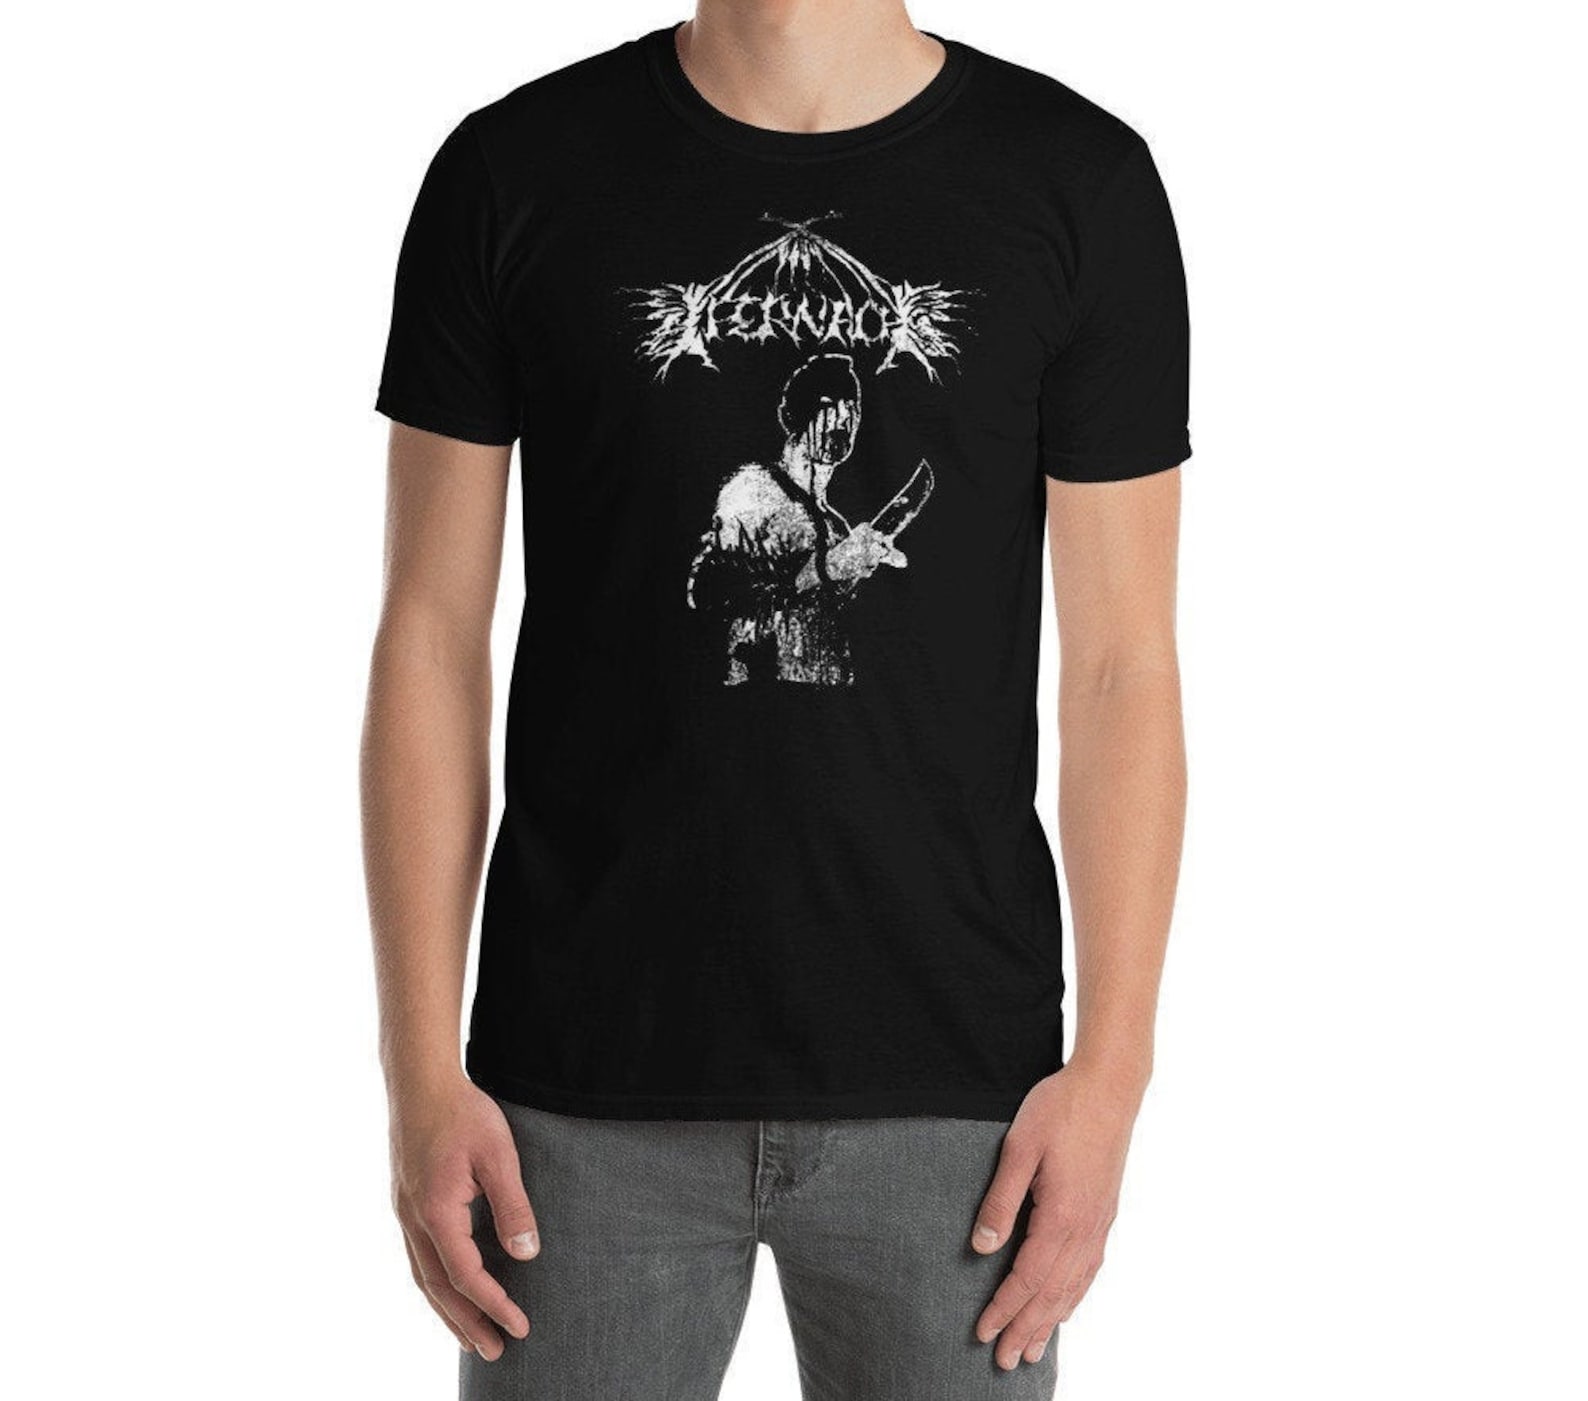 Ifernach T-shirt Black Metal Band | Etsy